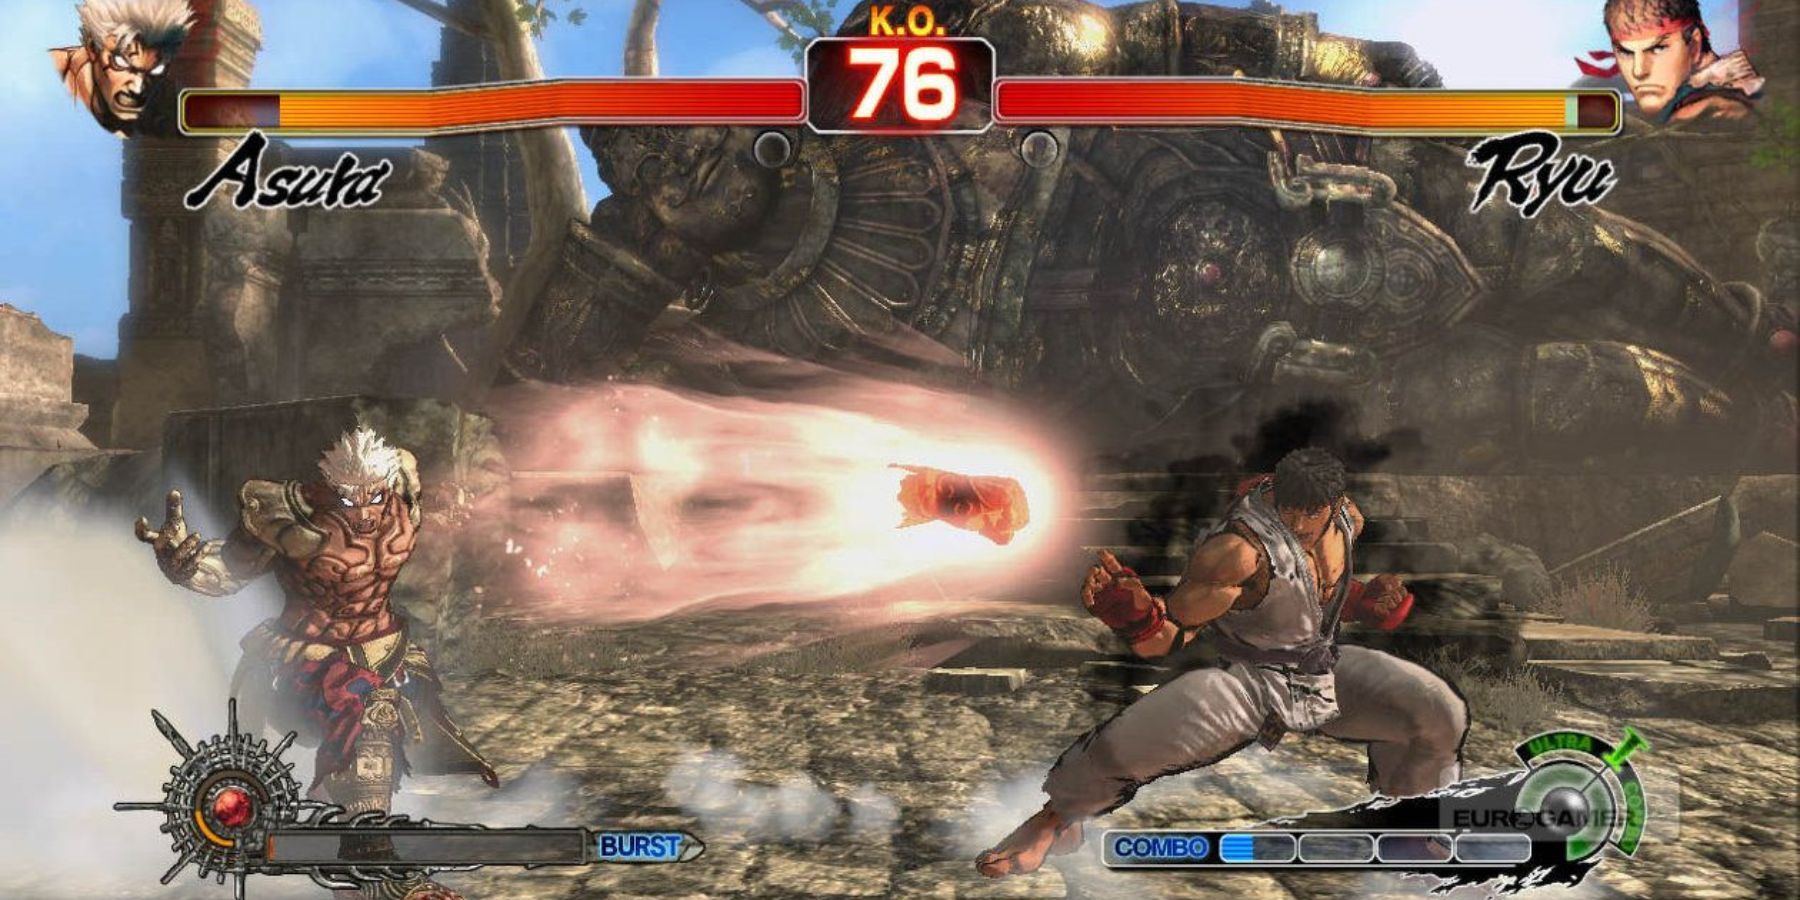 Asura battling Ryu